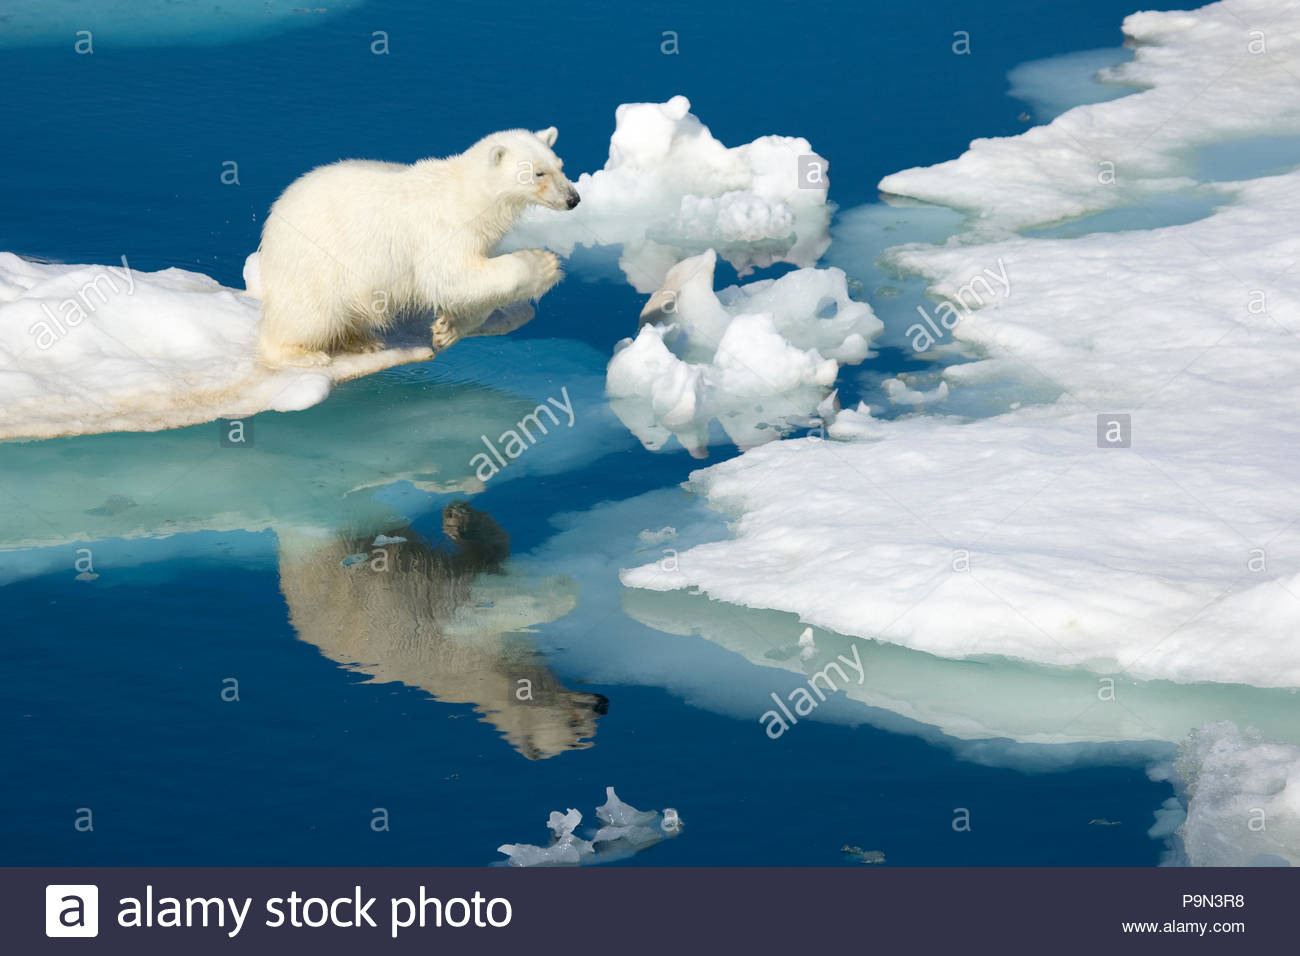 Polar bear, Ursus maritimus, on pack ice at water's edge. Stock Photo